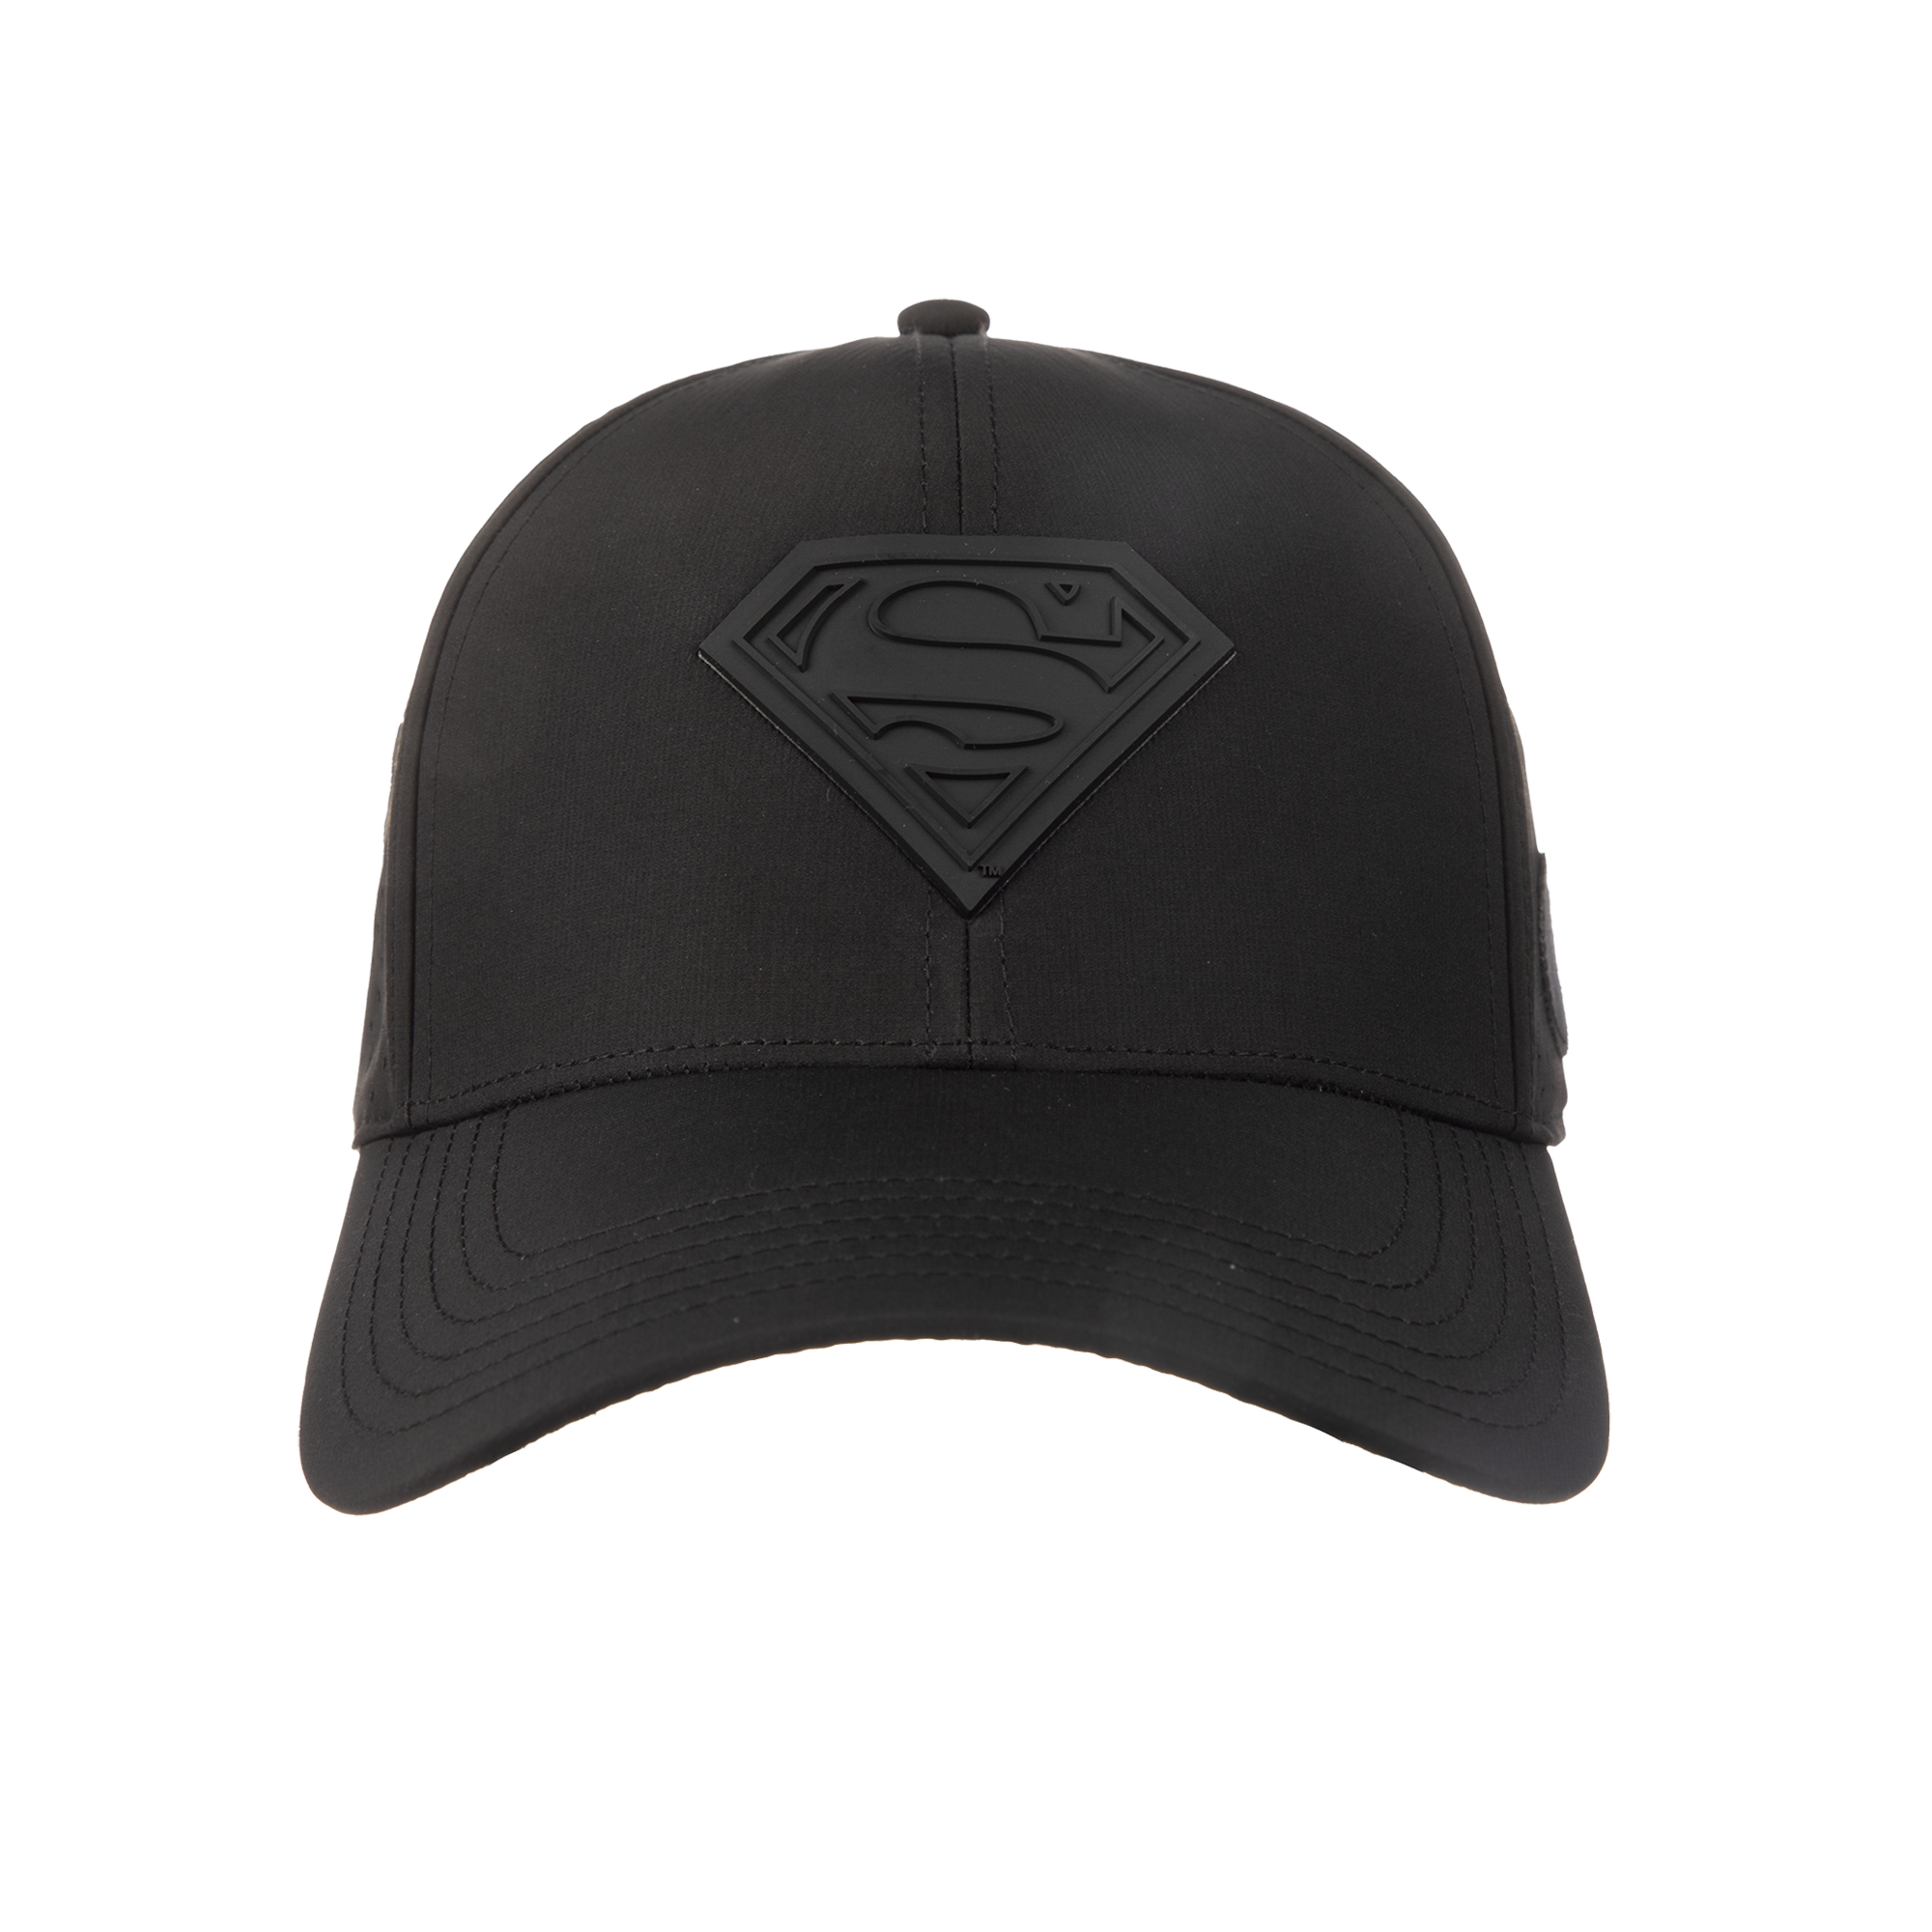 Superman Performance Hat